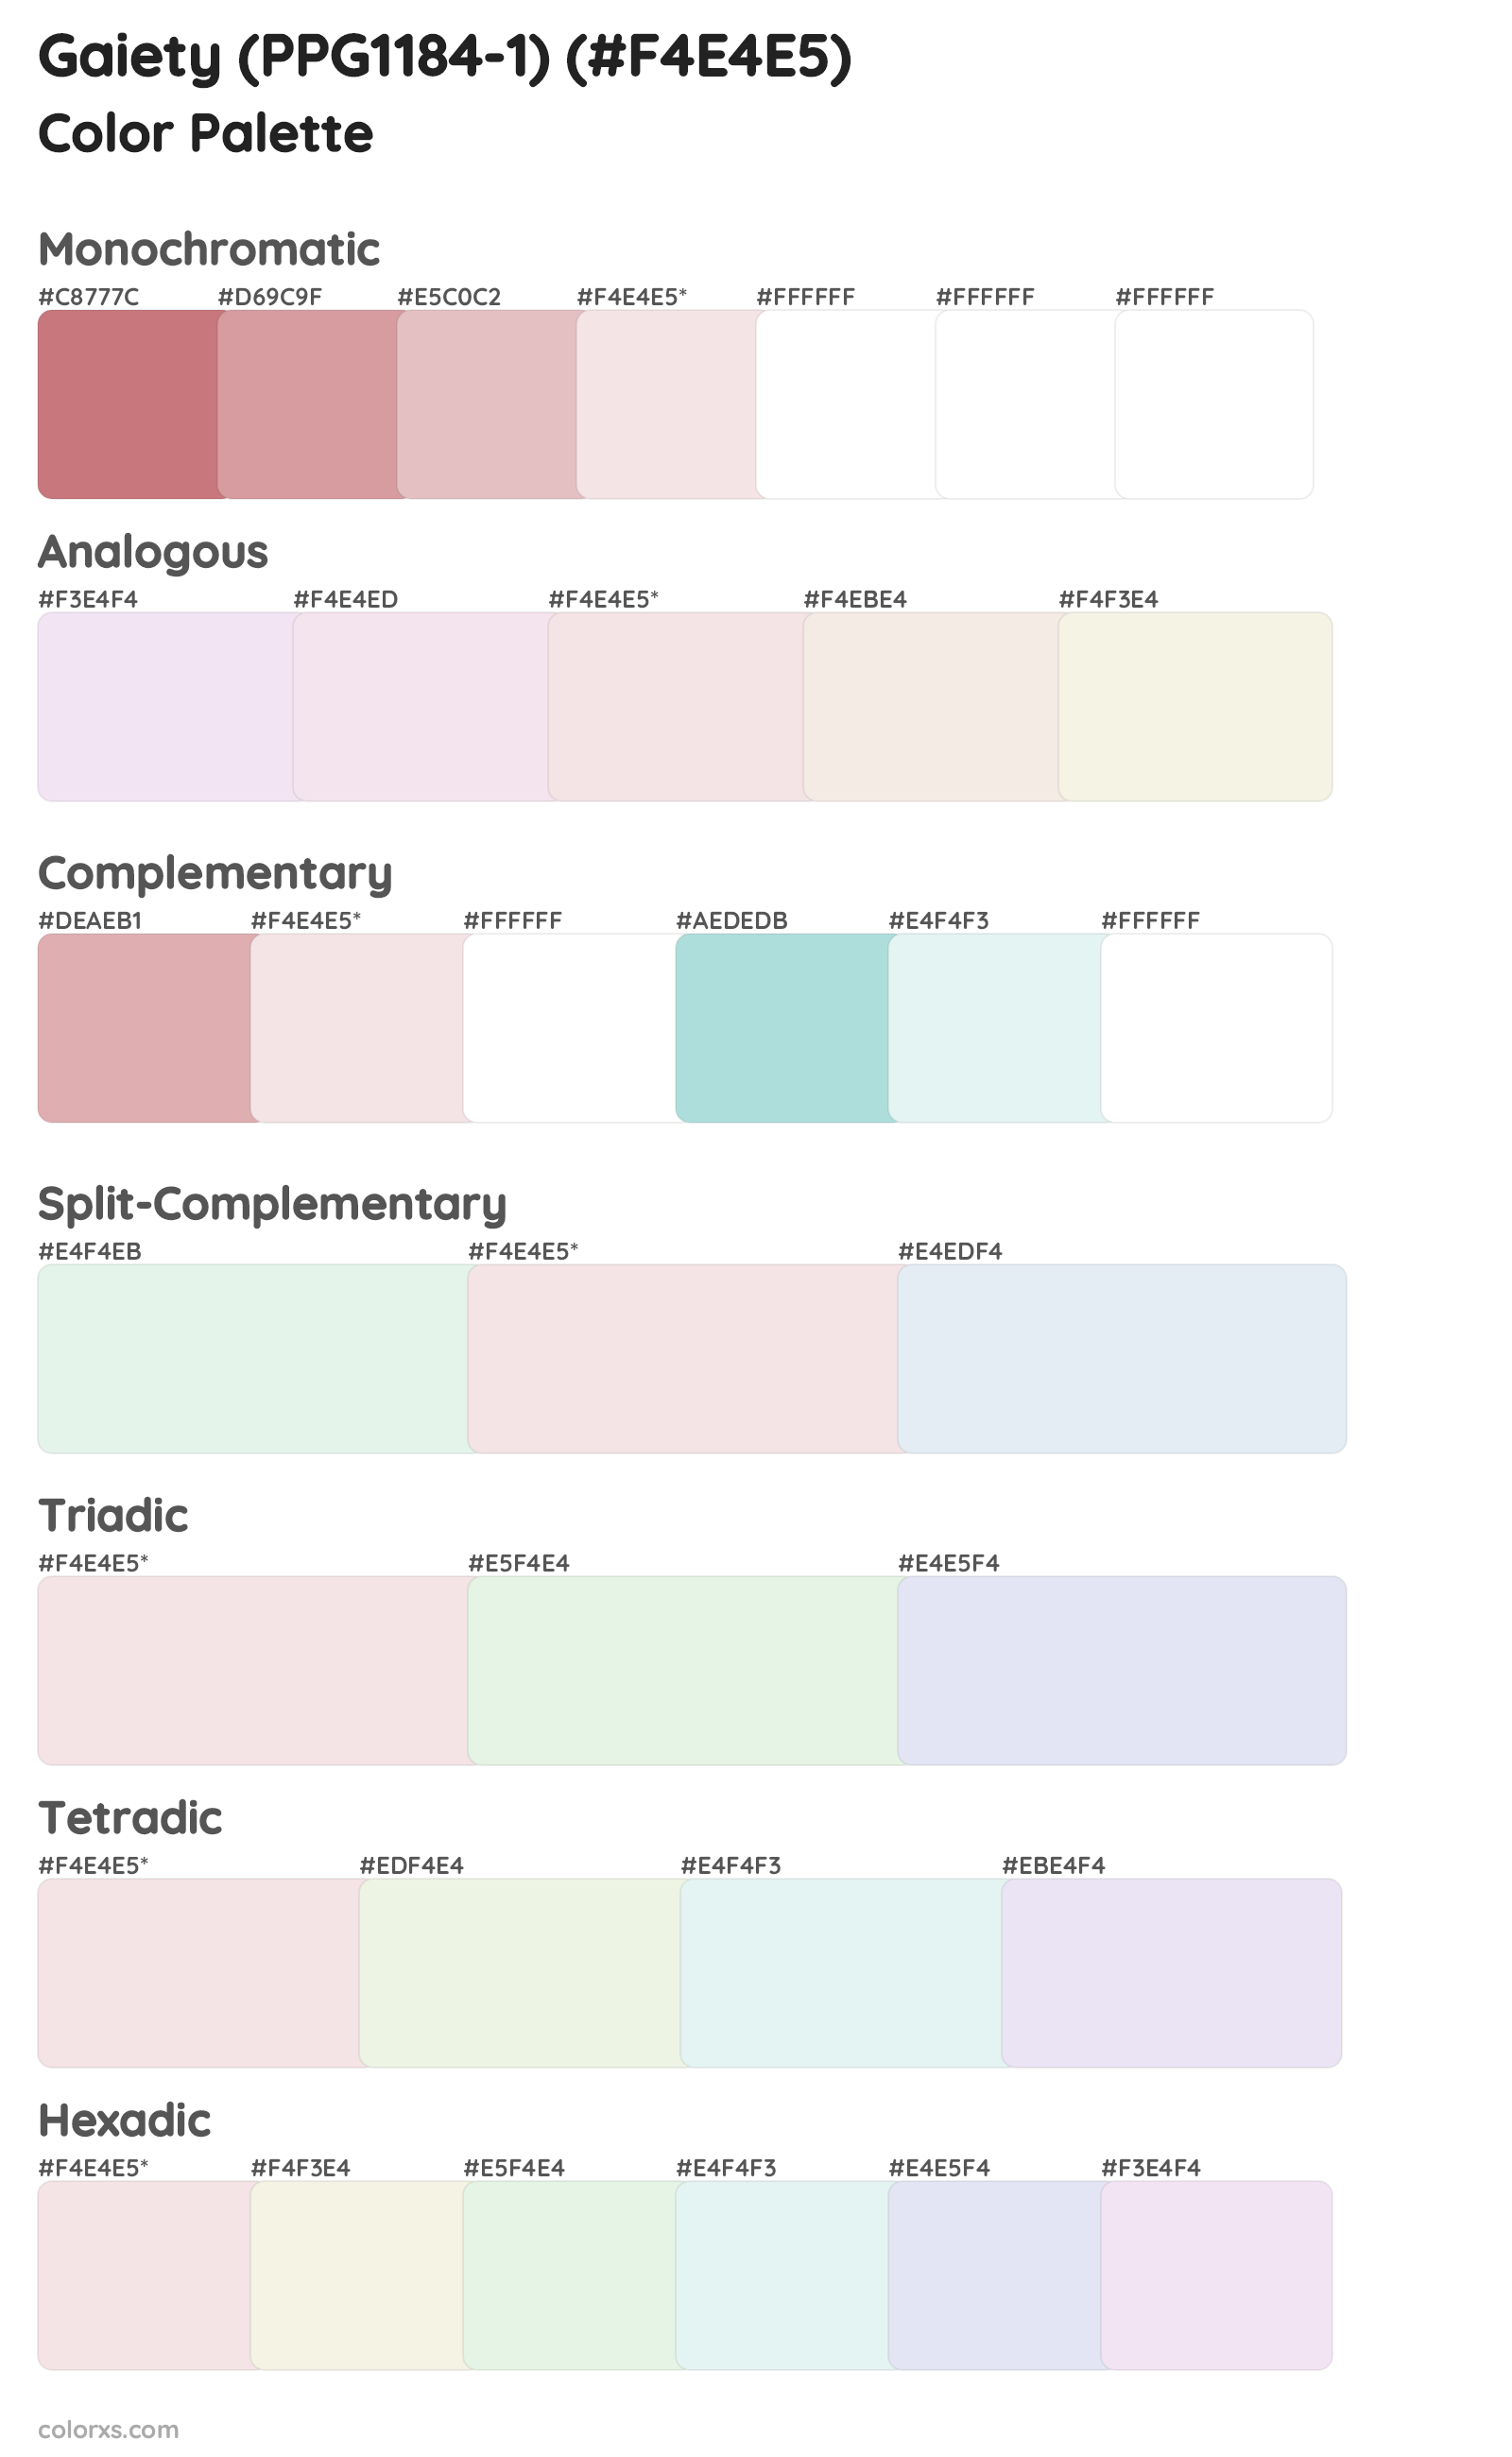 Gaiety (PPG1184-1) Color Scheme Palettes